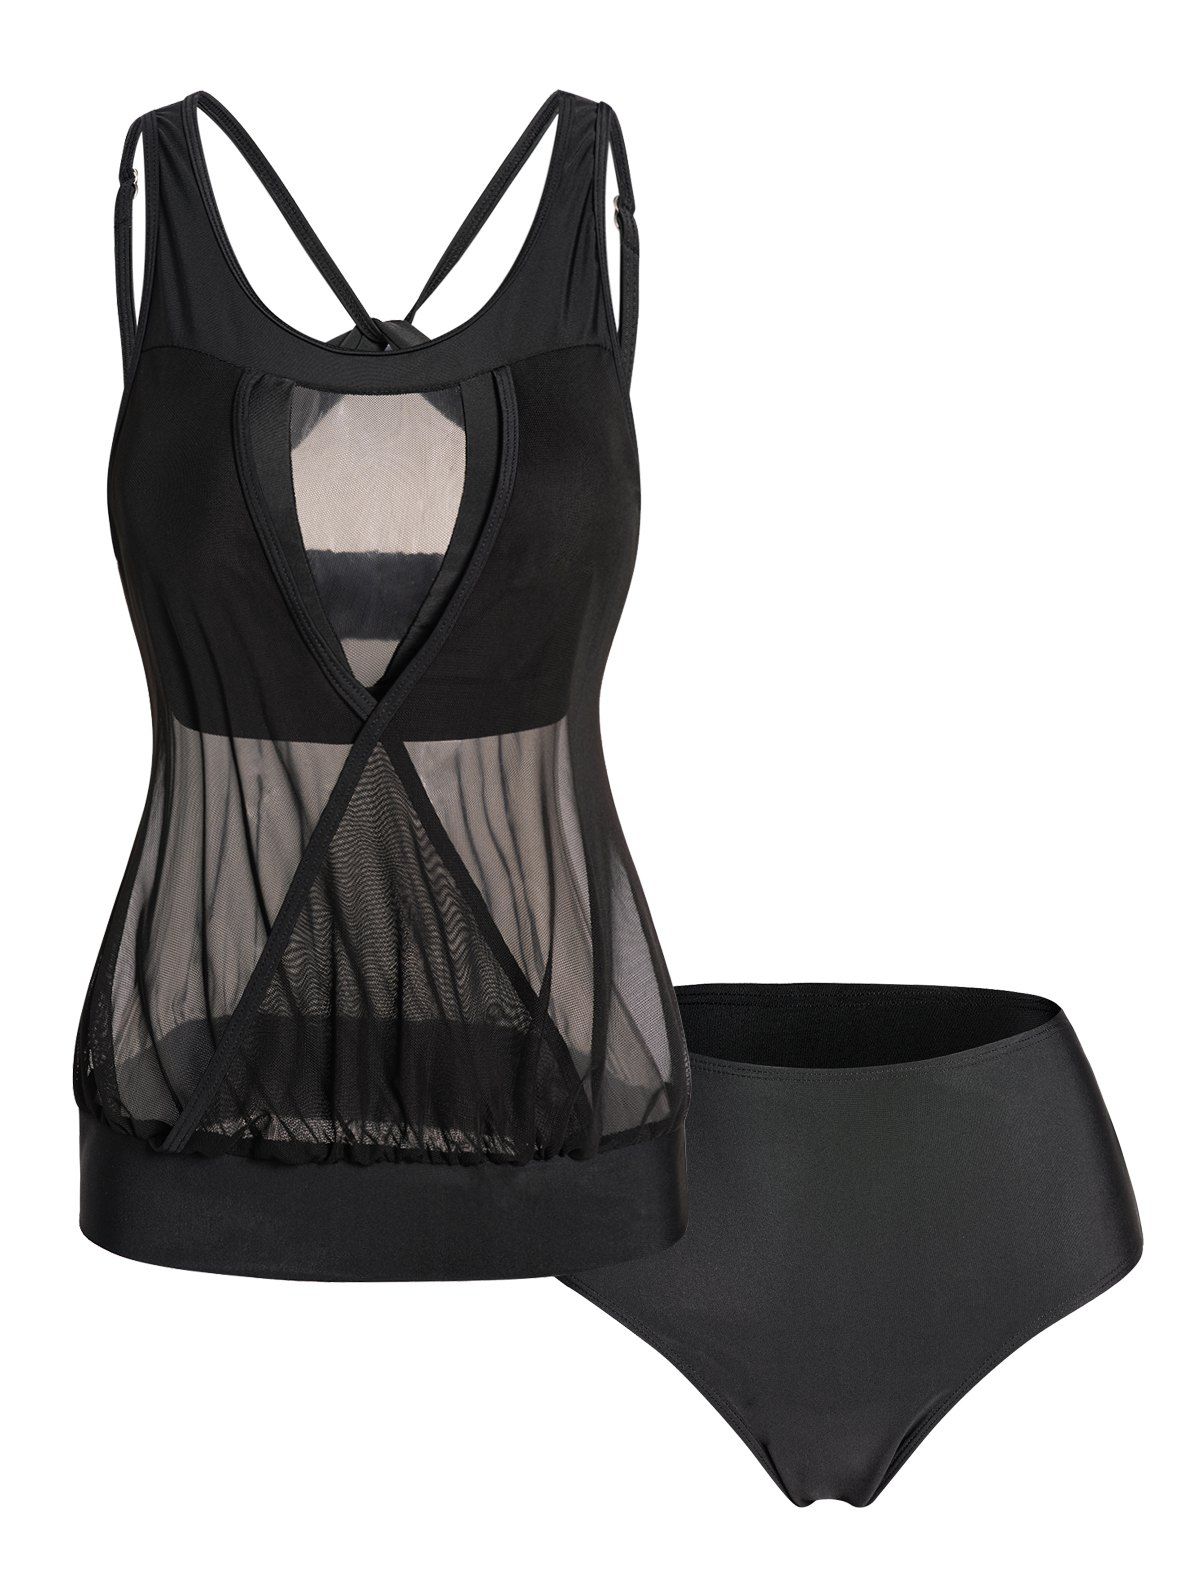 Modest Tankini Swimsuit Surplice Mesh Backless Swimwear Padded Tummy Control Bathing Suit - BLACK S